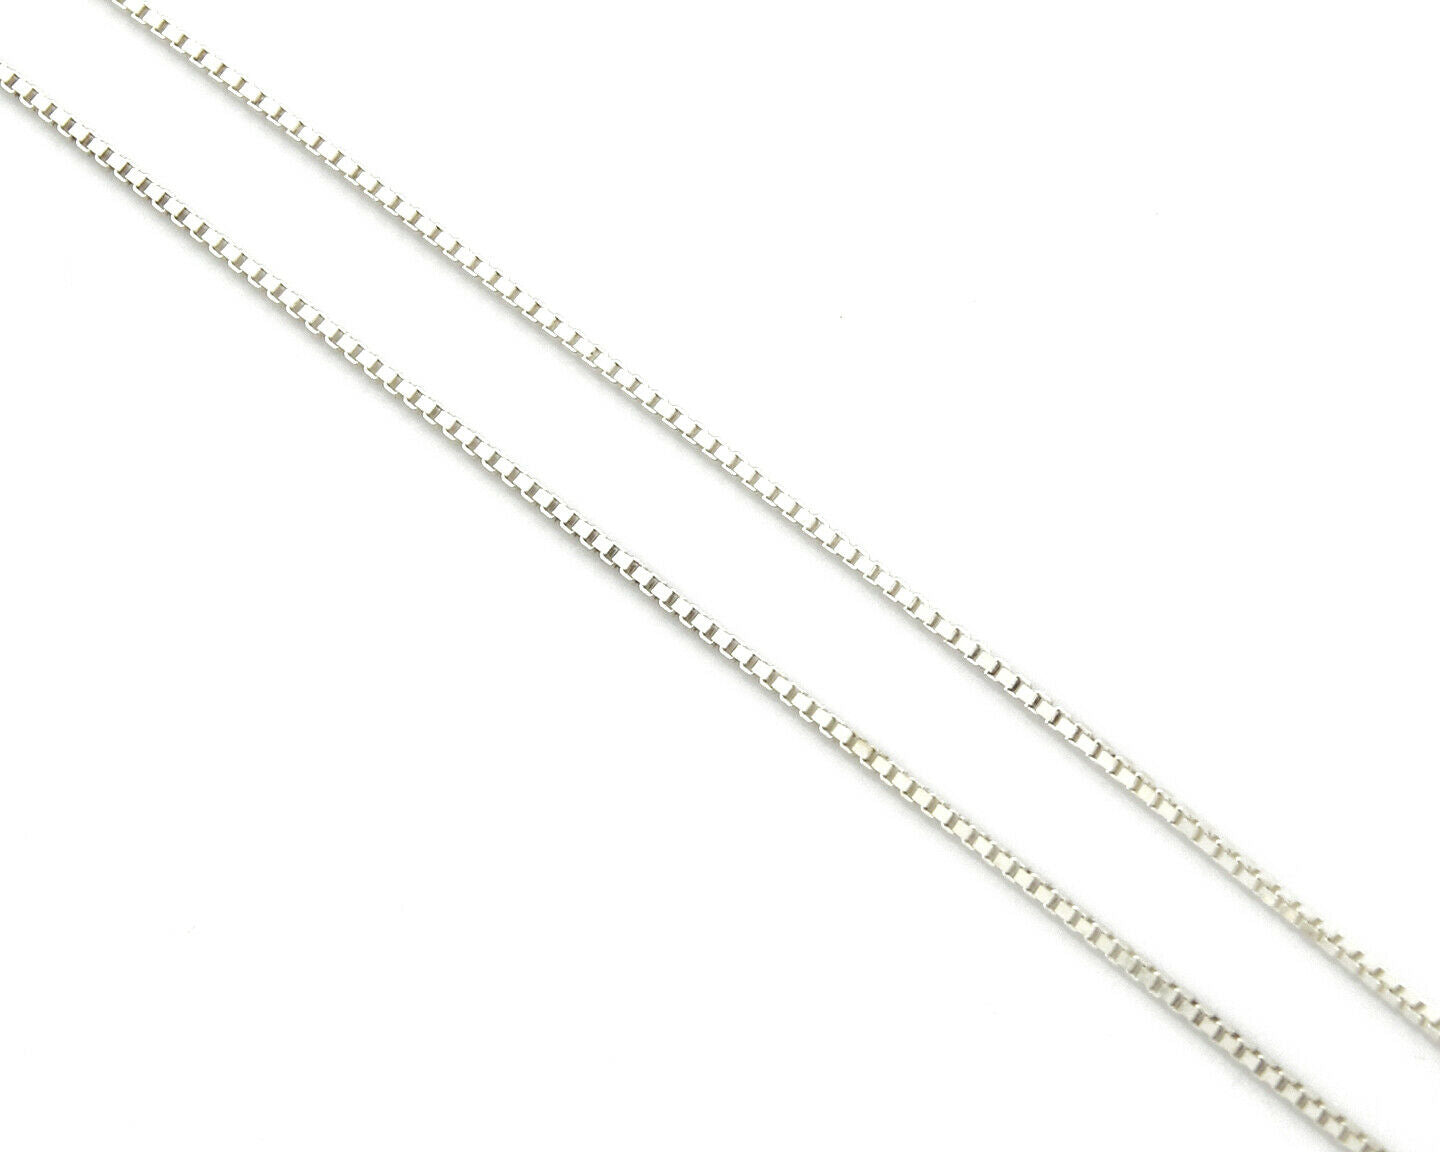 Women's Zuni Pendant .925 Silver Handmade Gemstone Necklace